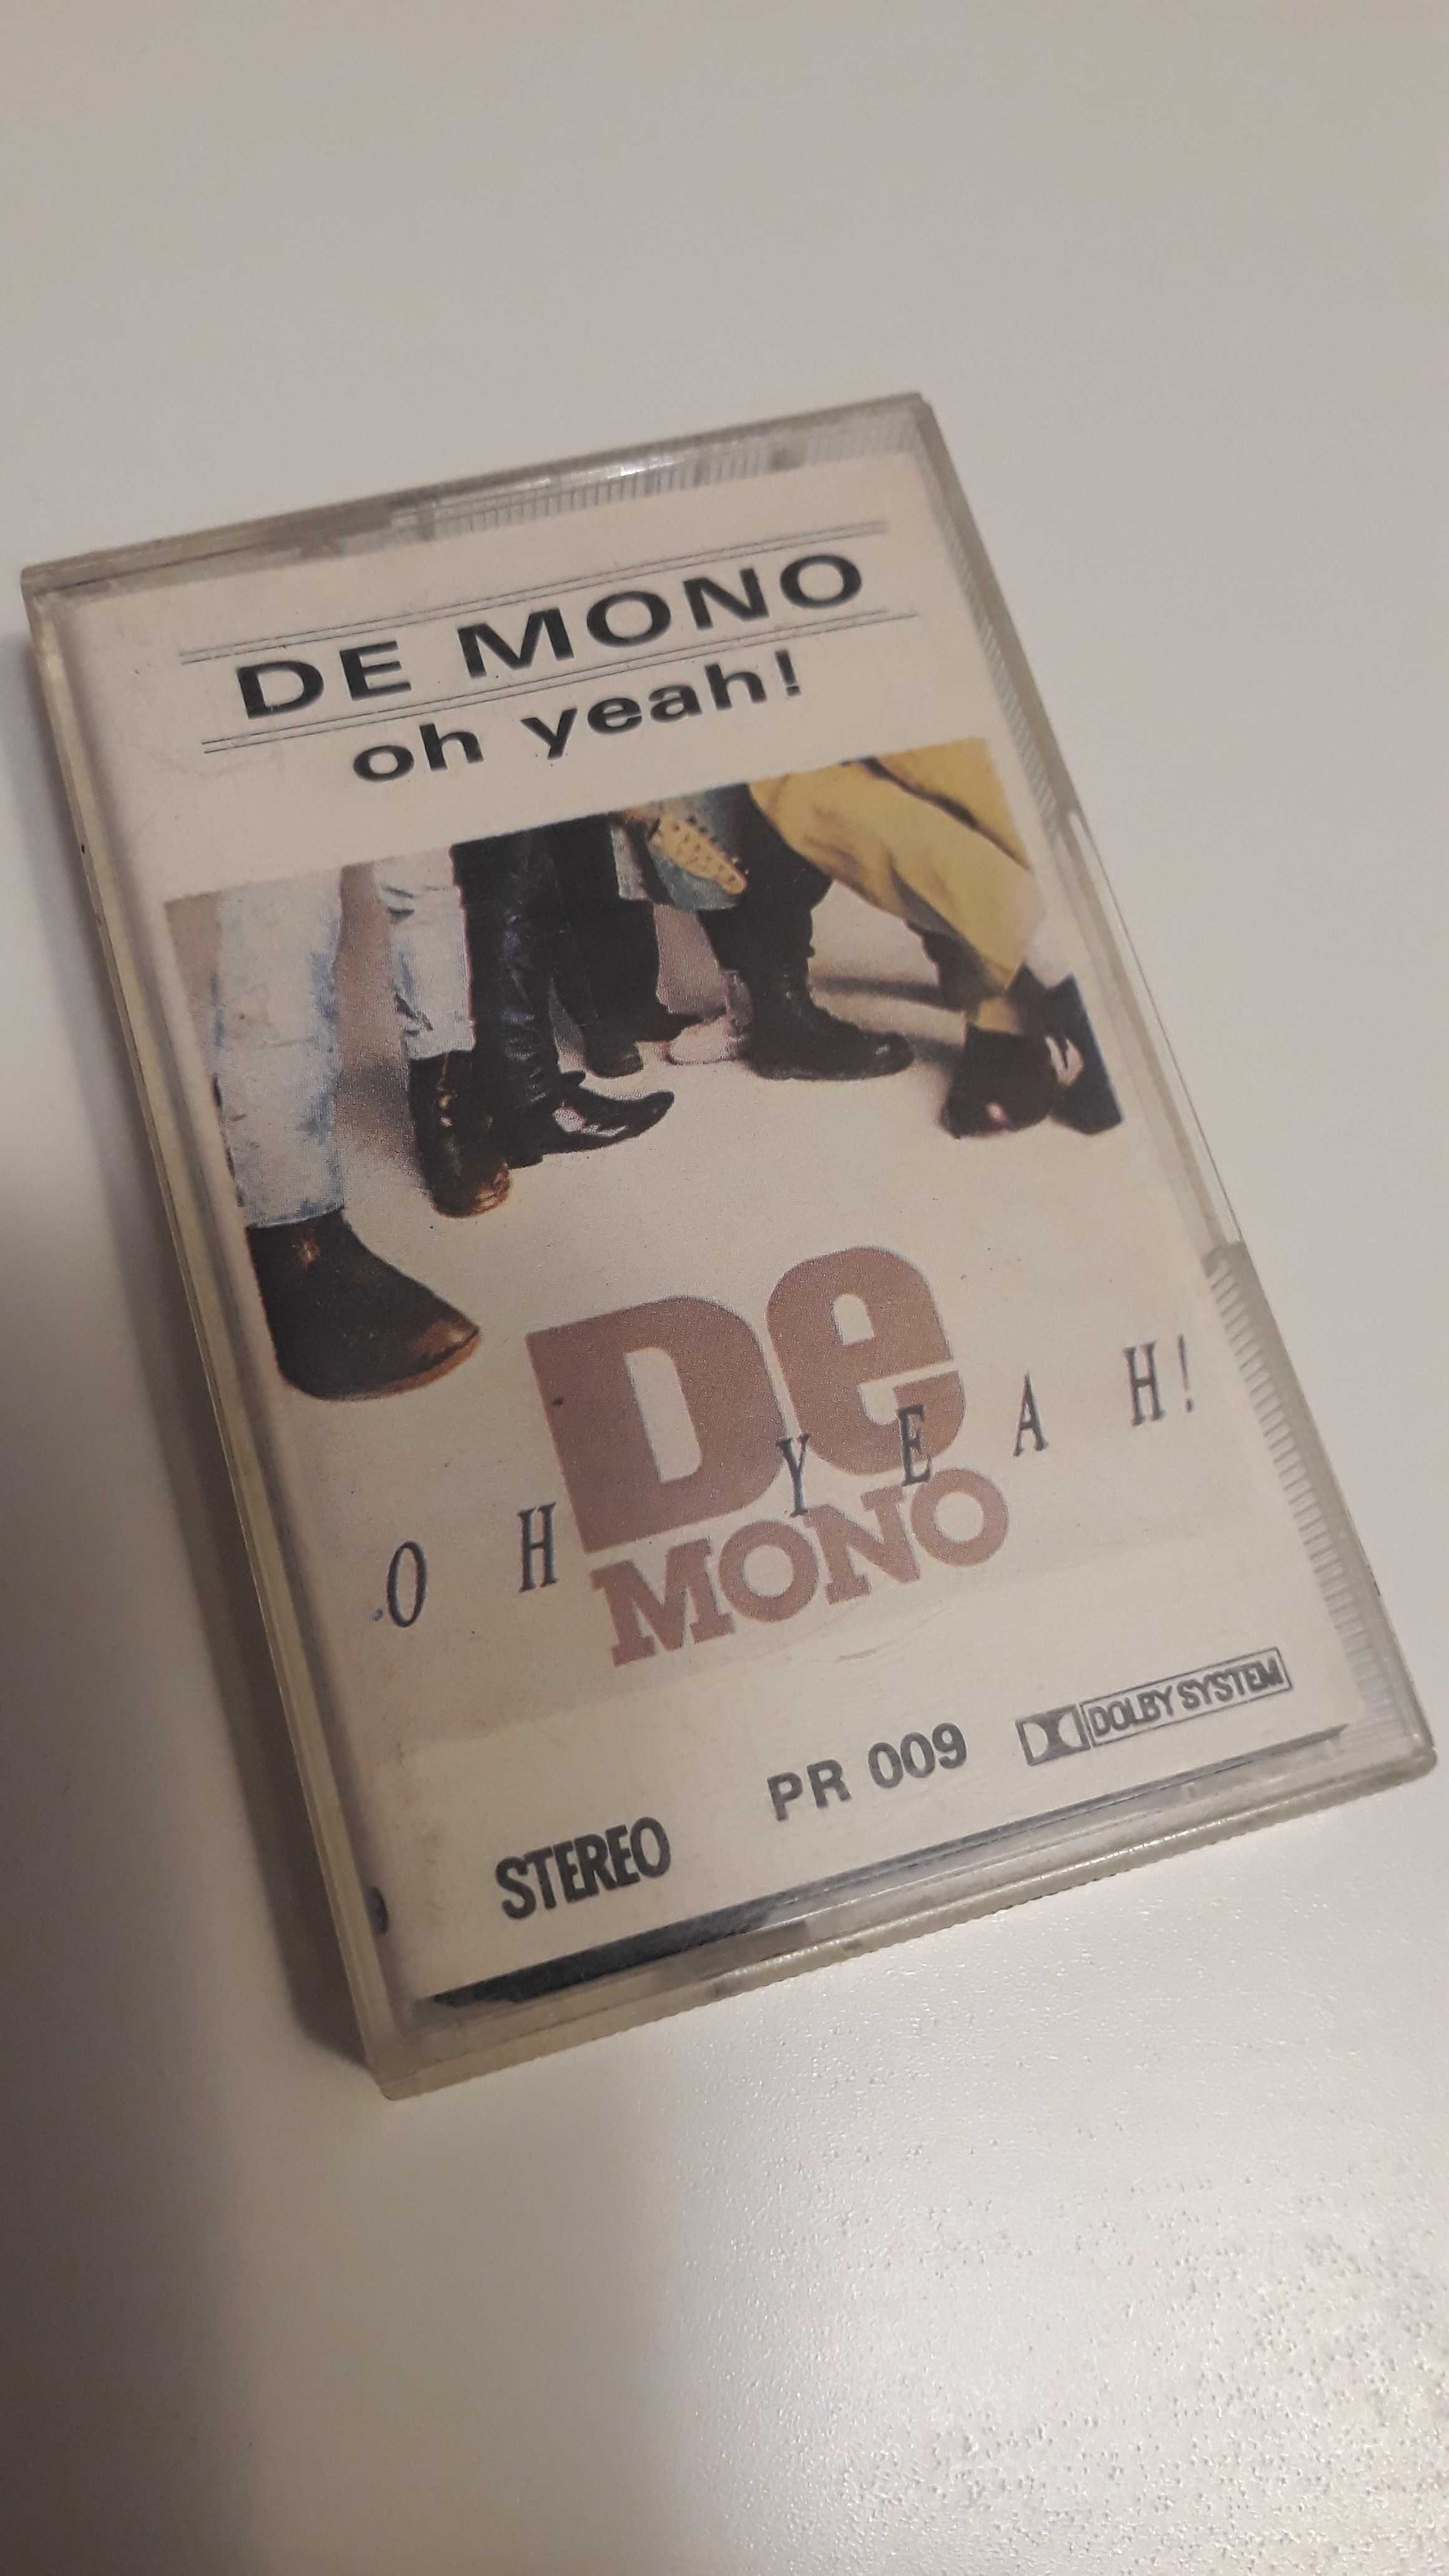 DeMono oh yeah! kaseta audio